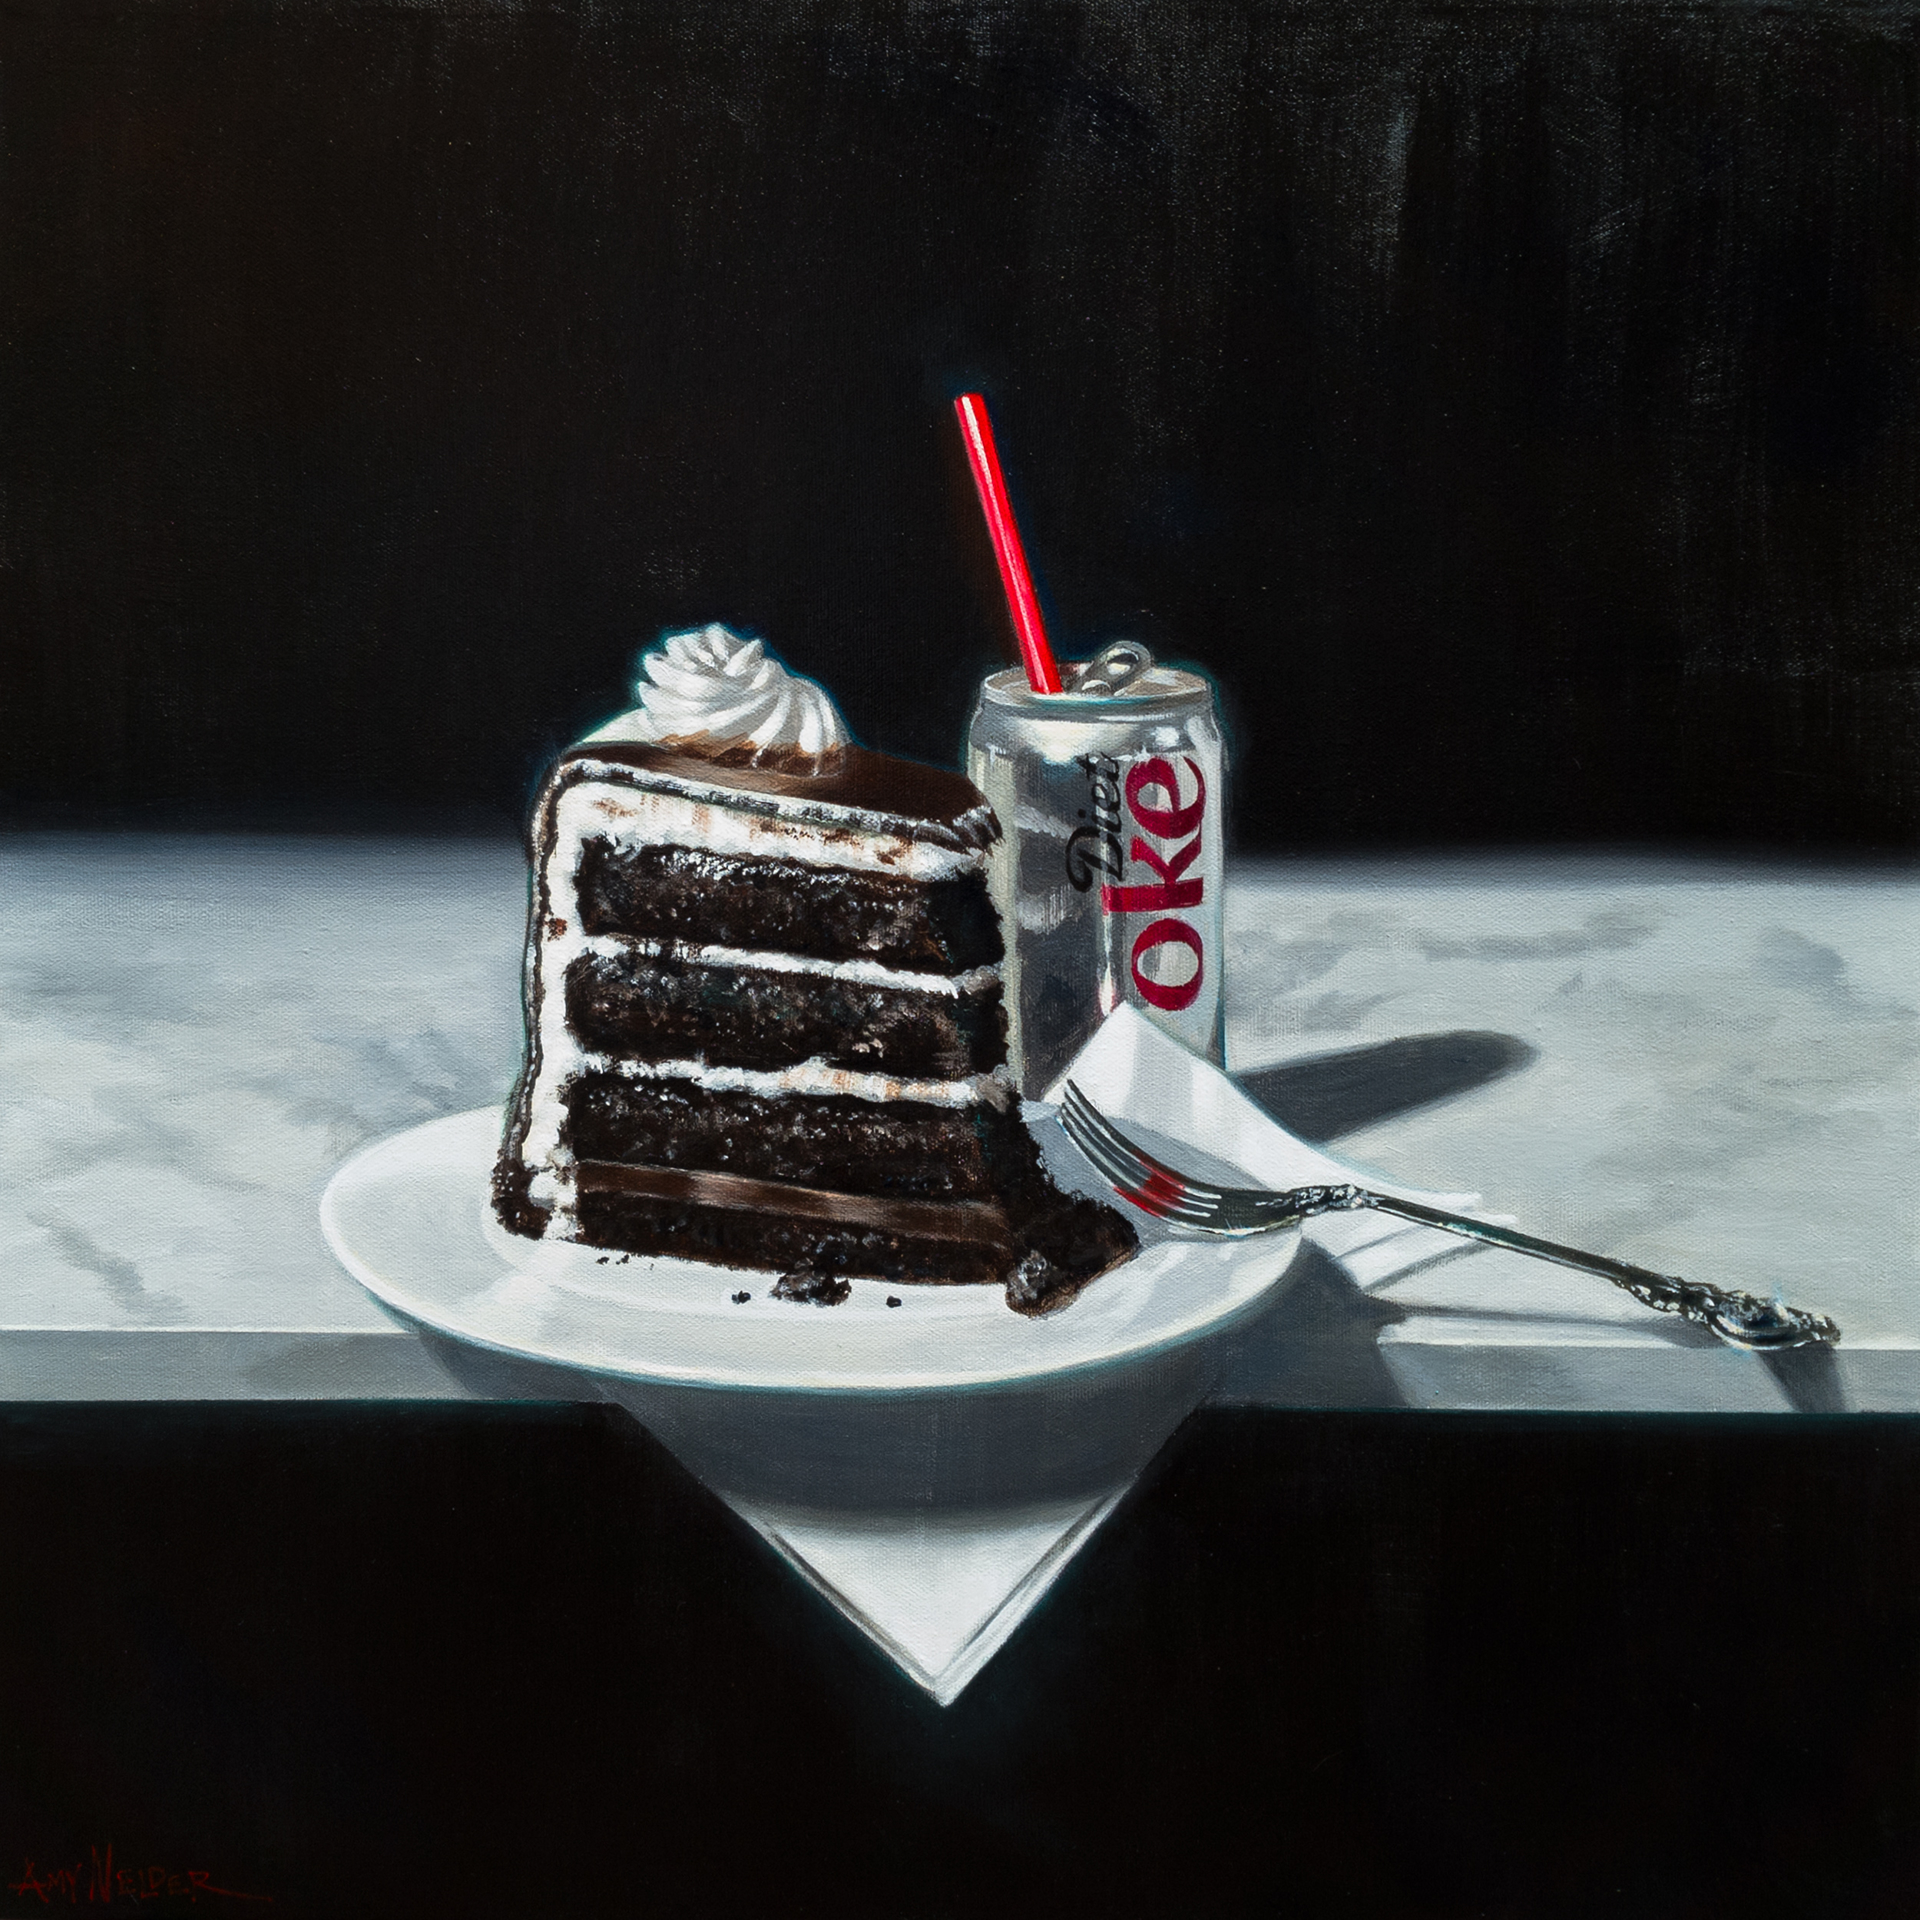 Kidding Myself with Cake (S/N) by Amy Nelder